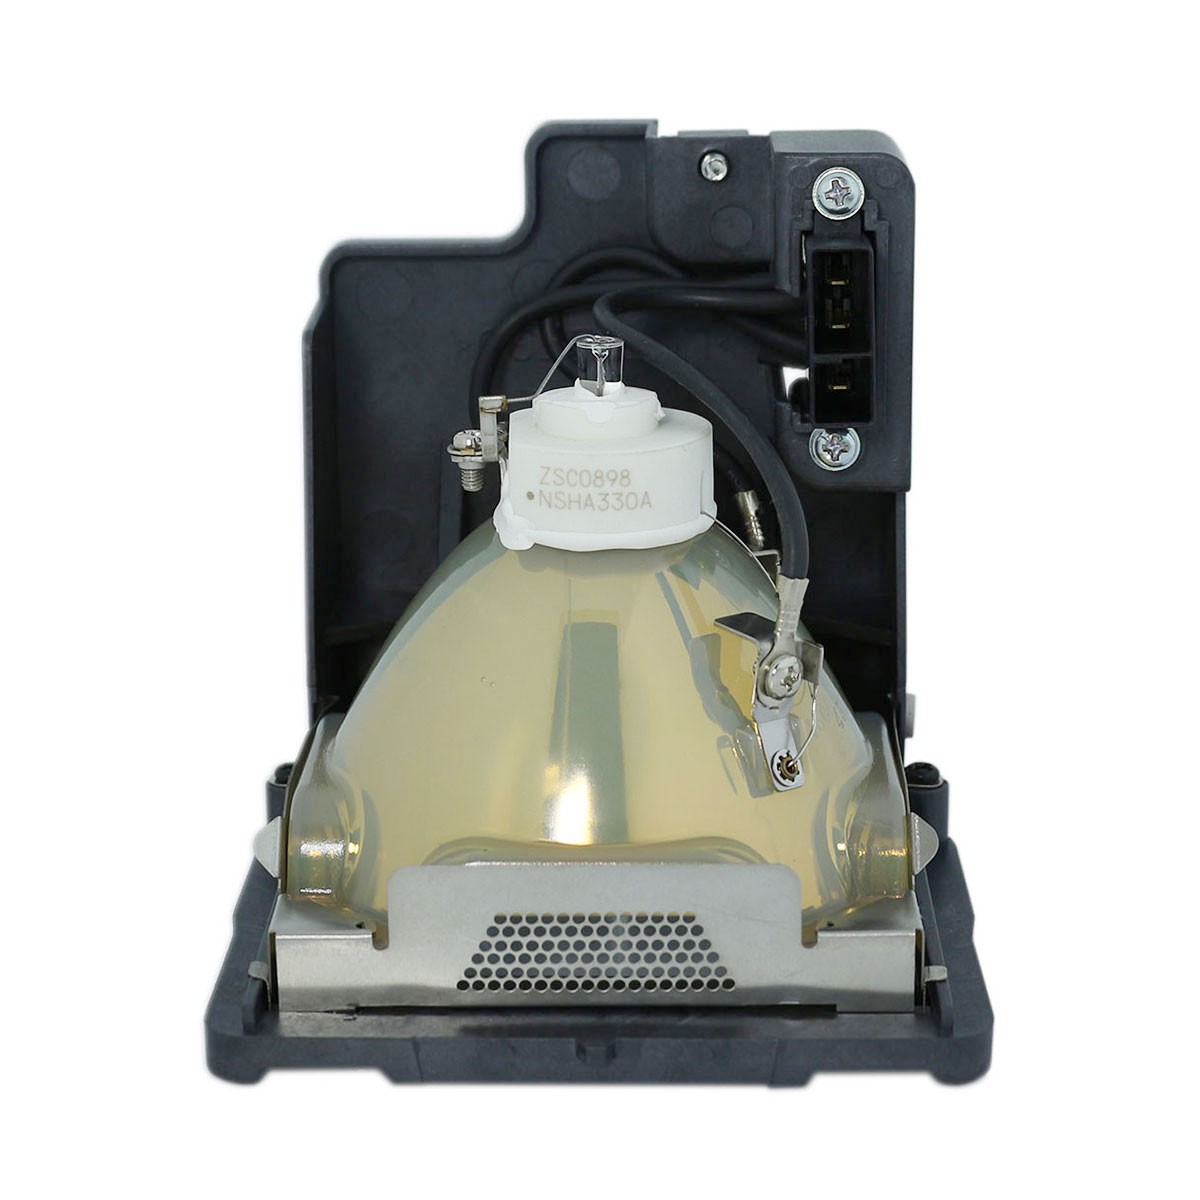 Panasonic ET-SLMP109 Ushio Projector Lamp Module - image 3 of 5